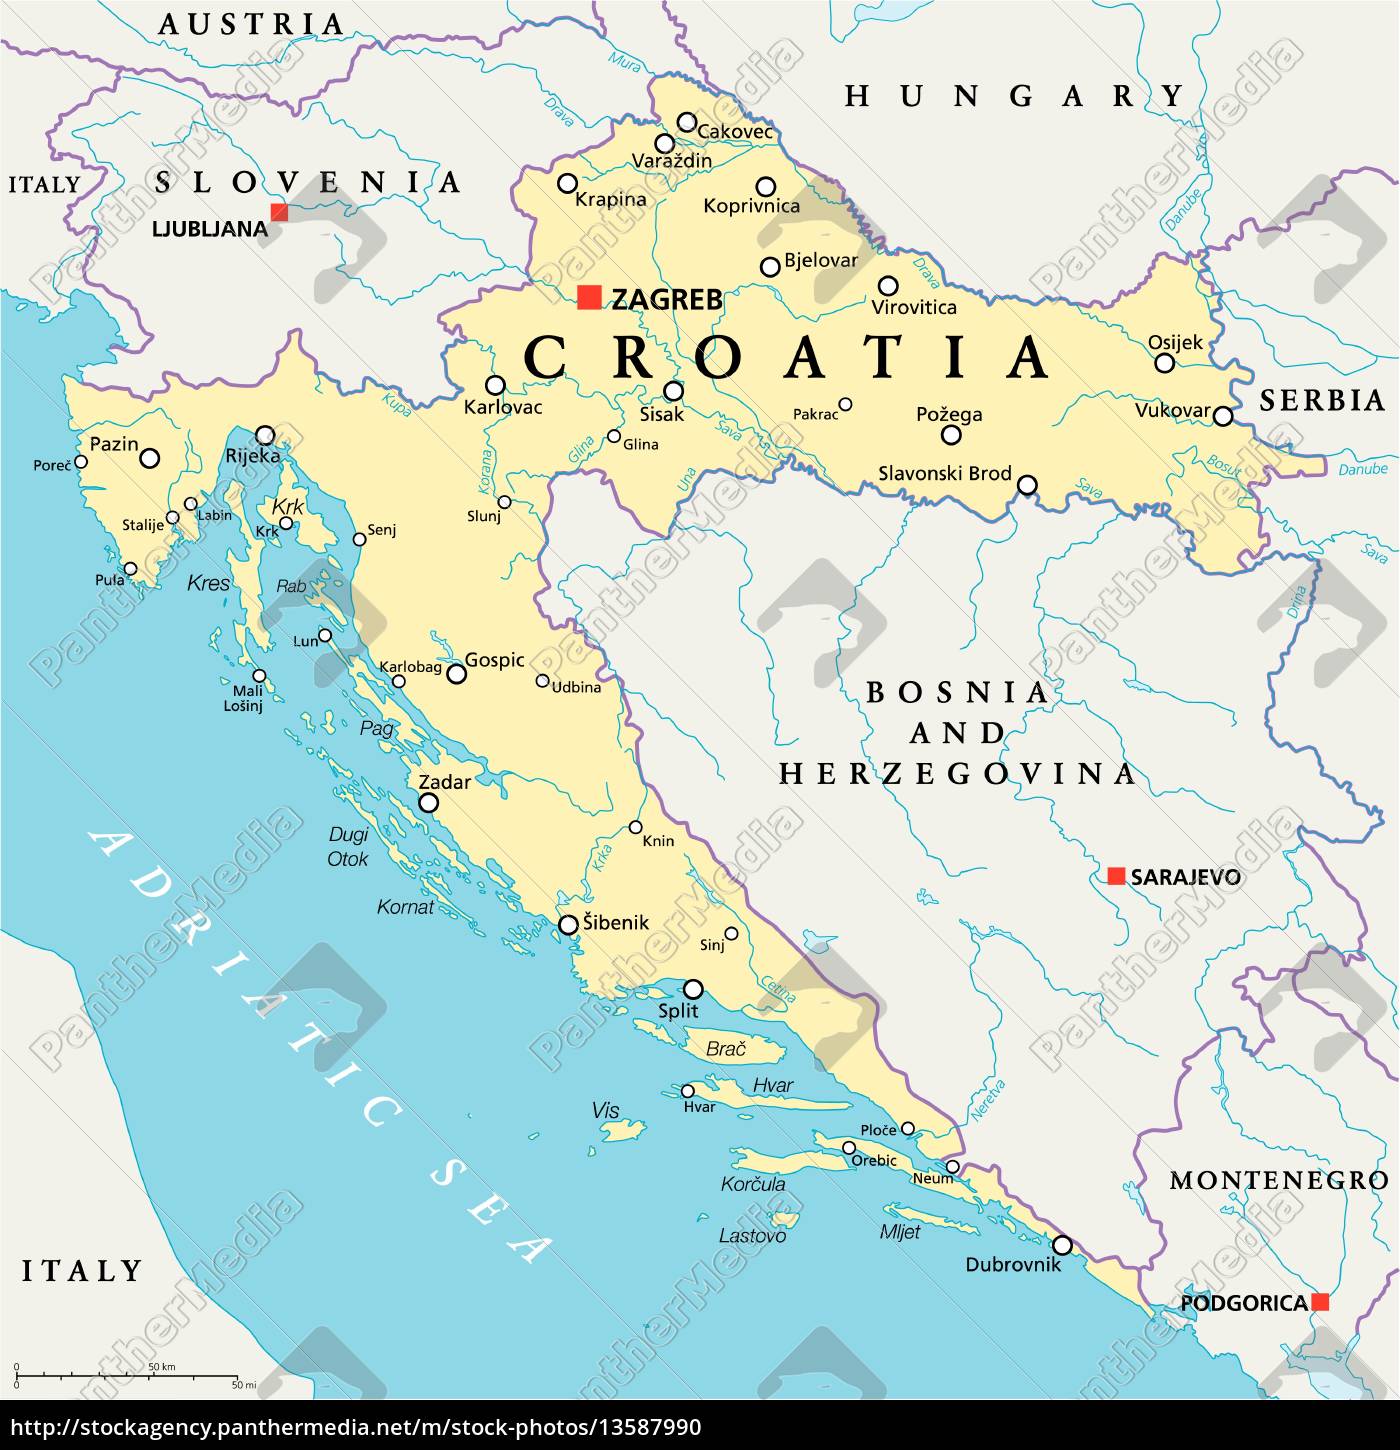 kroatien politisk kort - Stockphoto #13587990 | PantherMedia Billedbureau